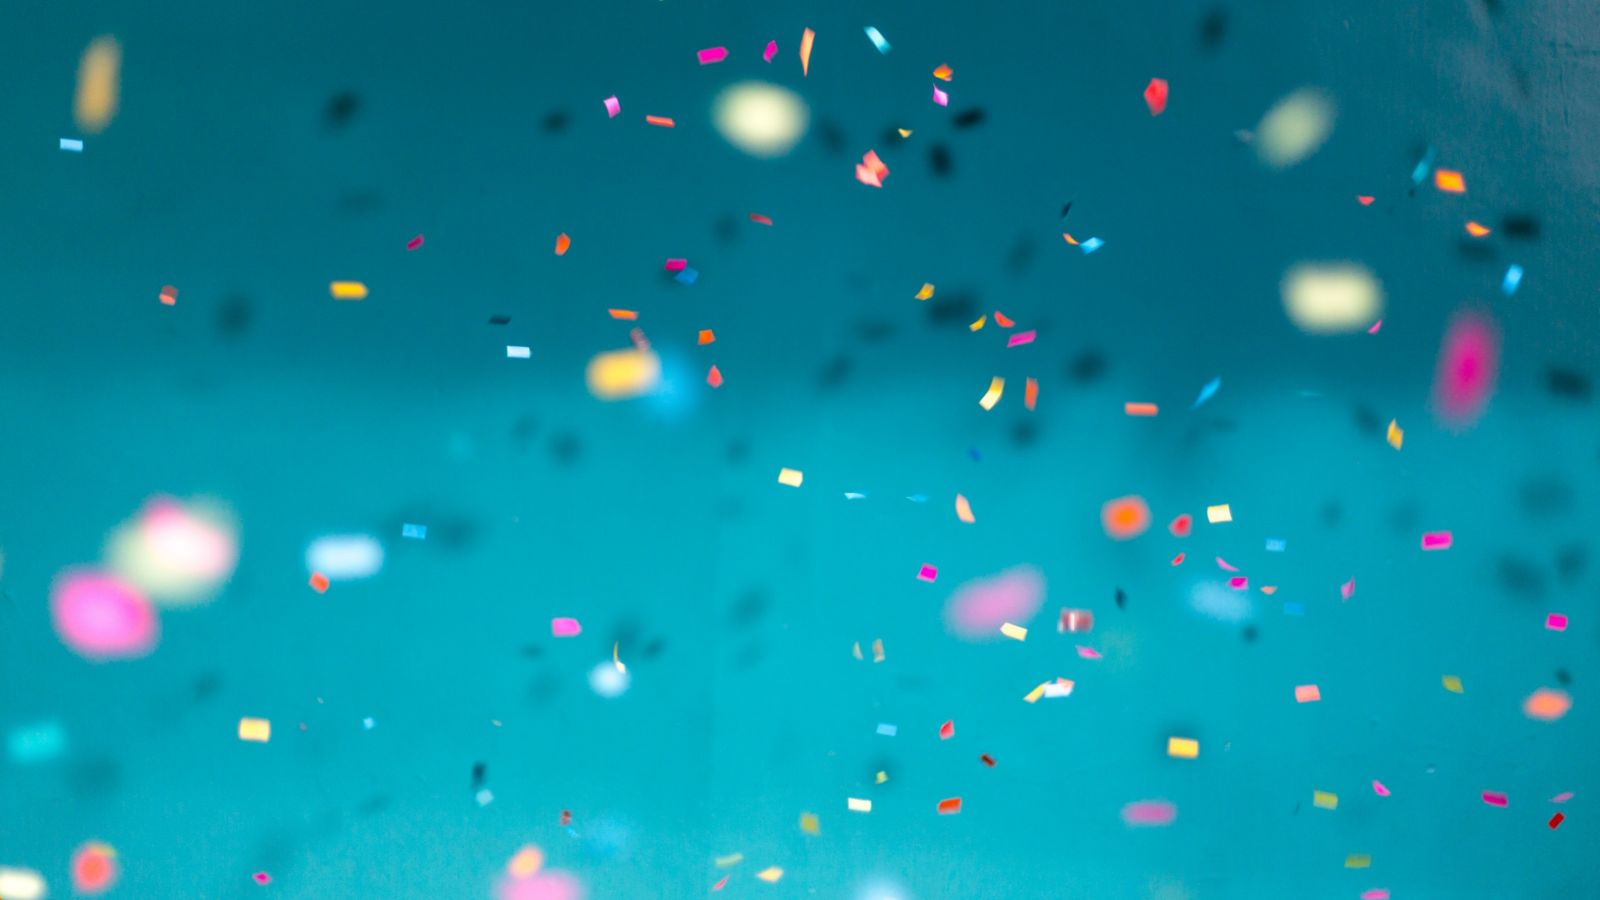 Confetti falling against a blue background